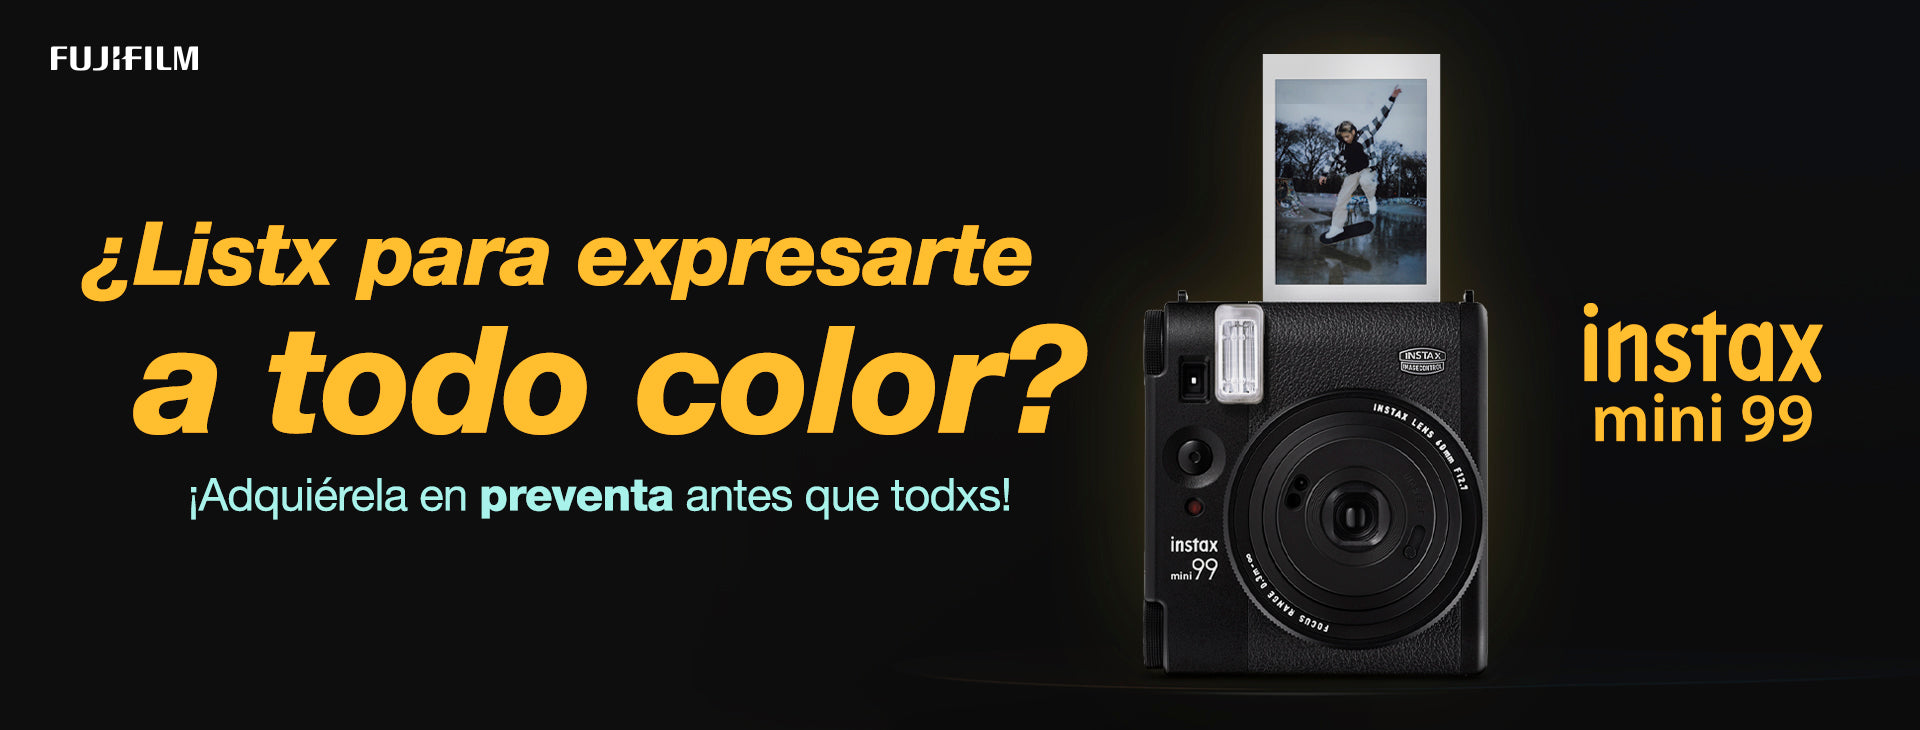 Cámaras Instax – Instax - Tienda Fujifilm México